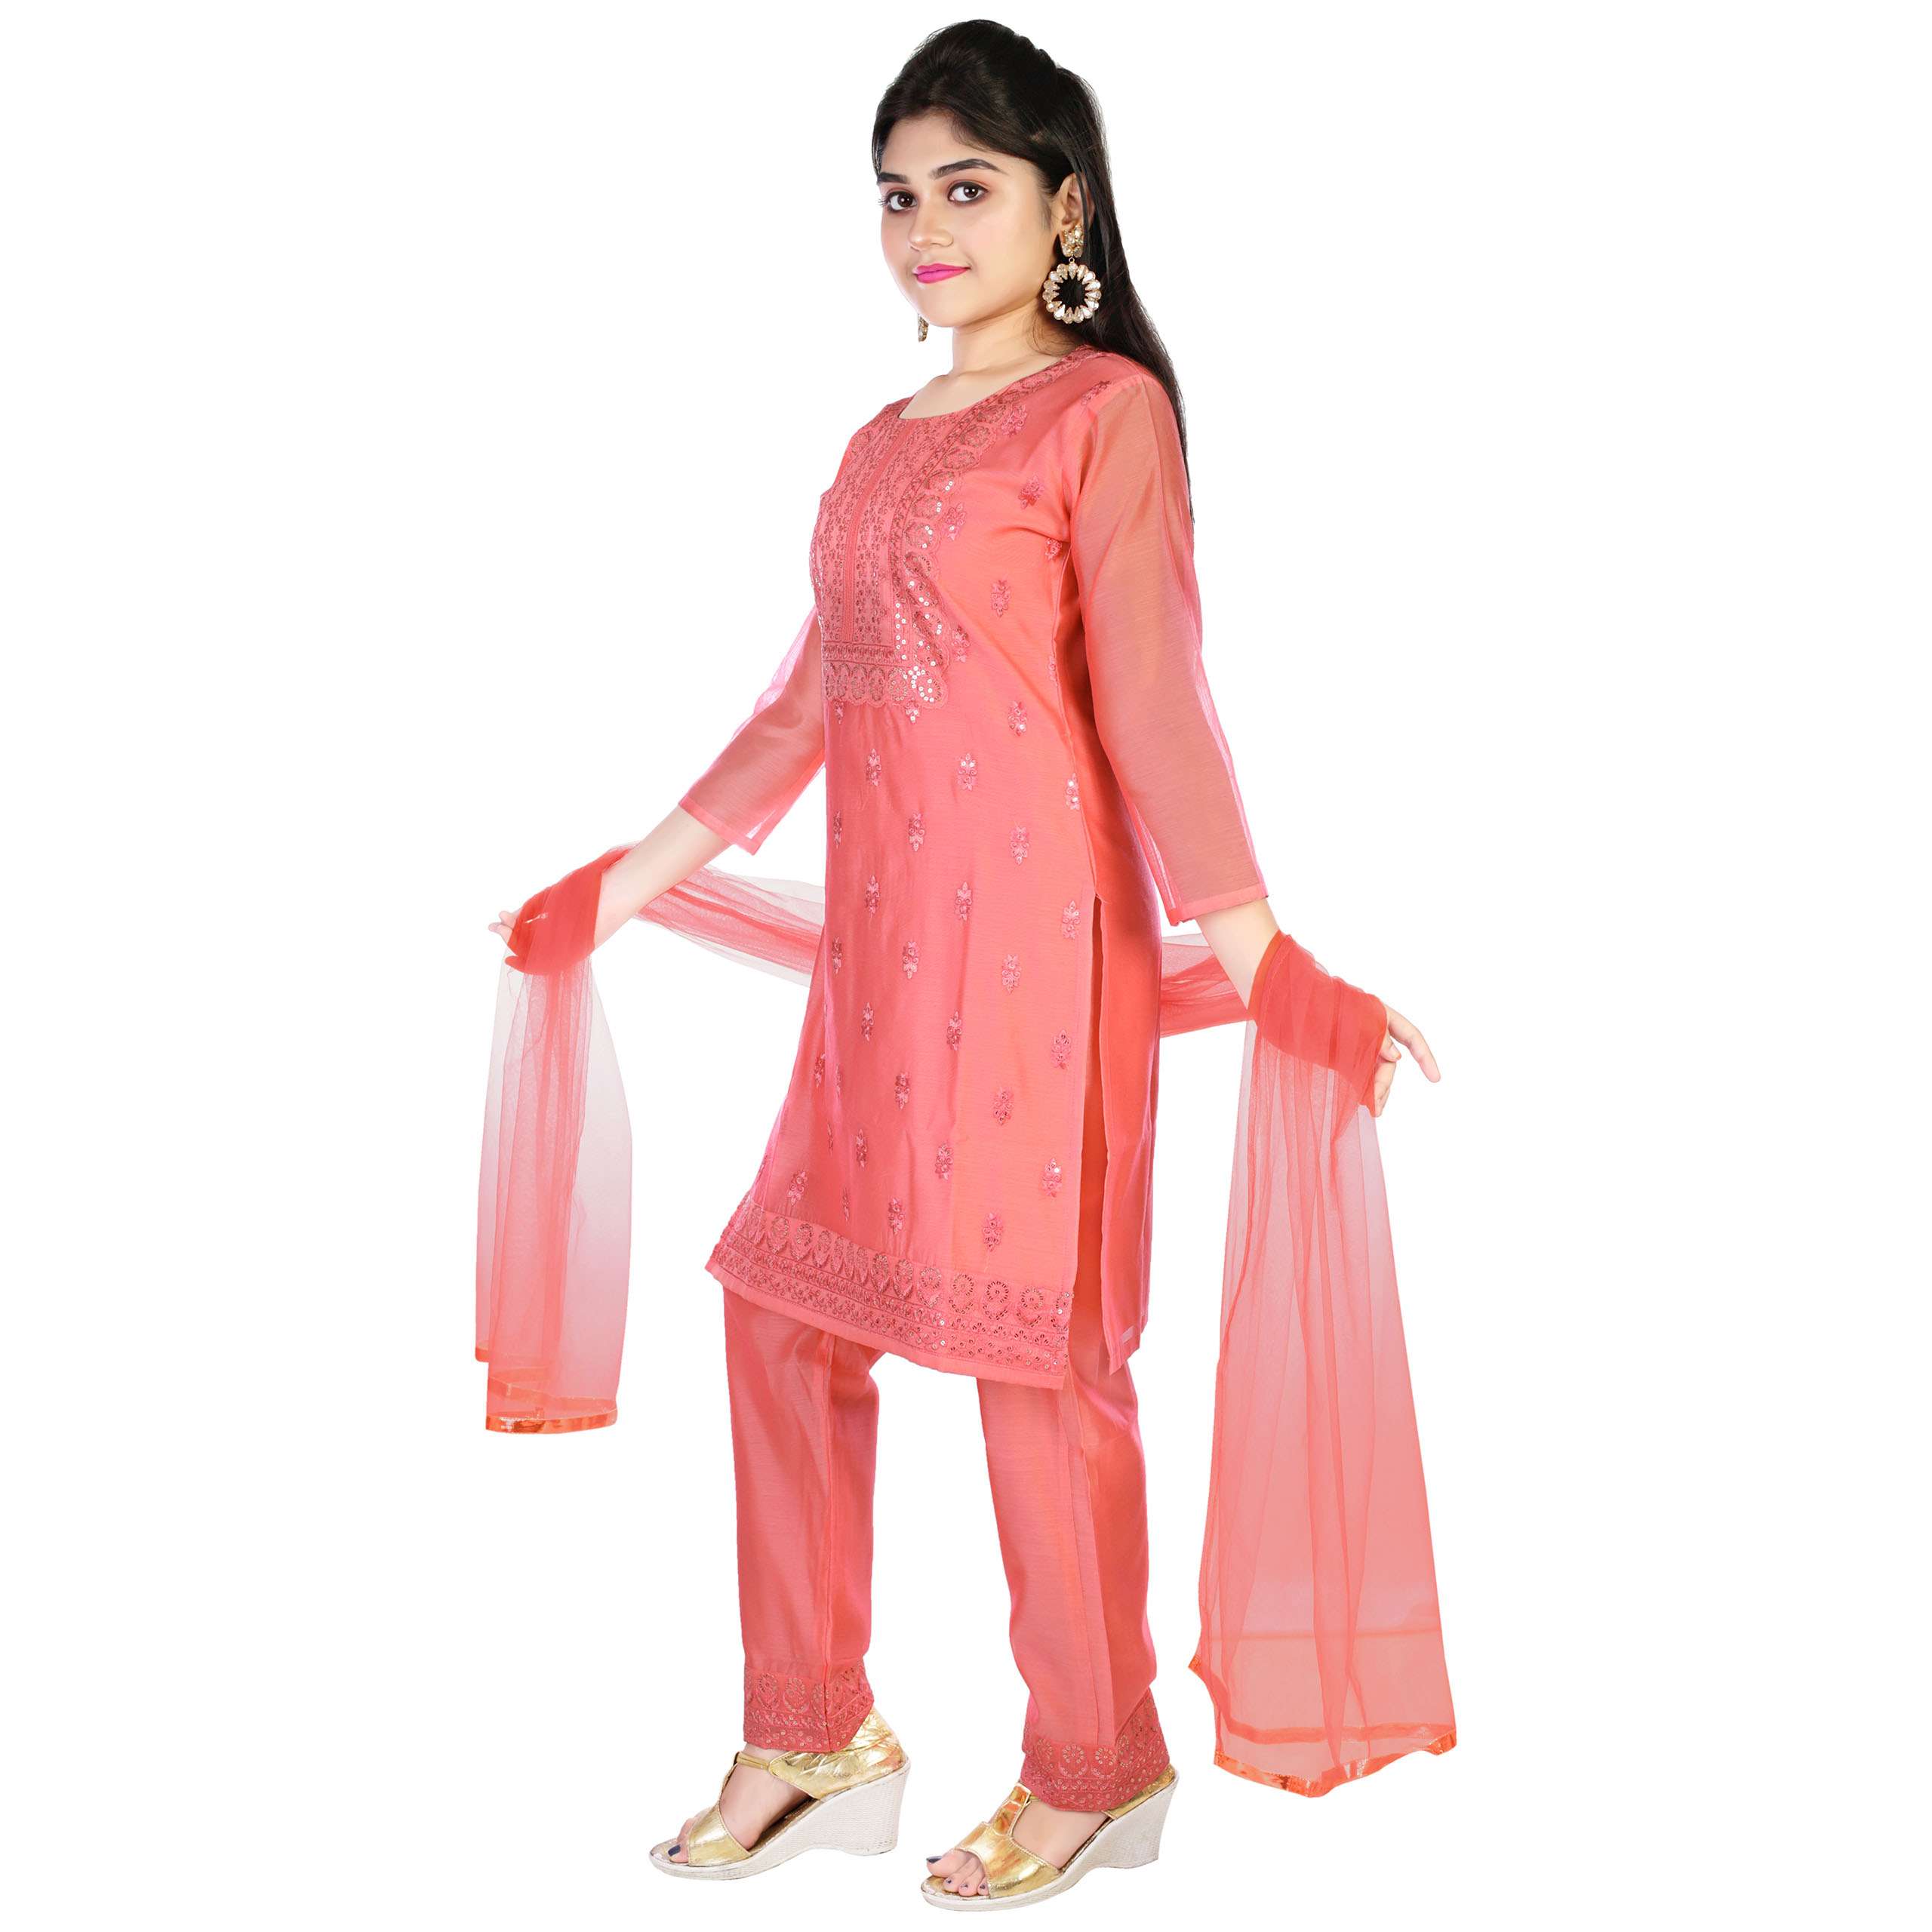 Balaji Emporium Presents Kids Wear Special Designer Indian Party Wear Straight Salwar Kameez Suit Girlish Dress Collection At Best Price 1120